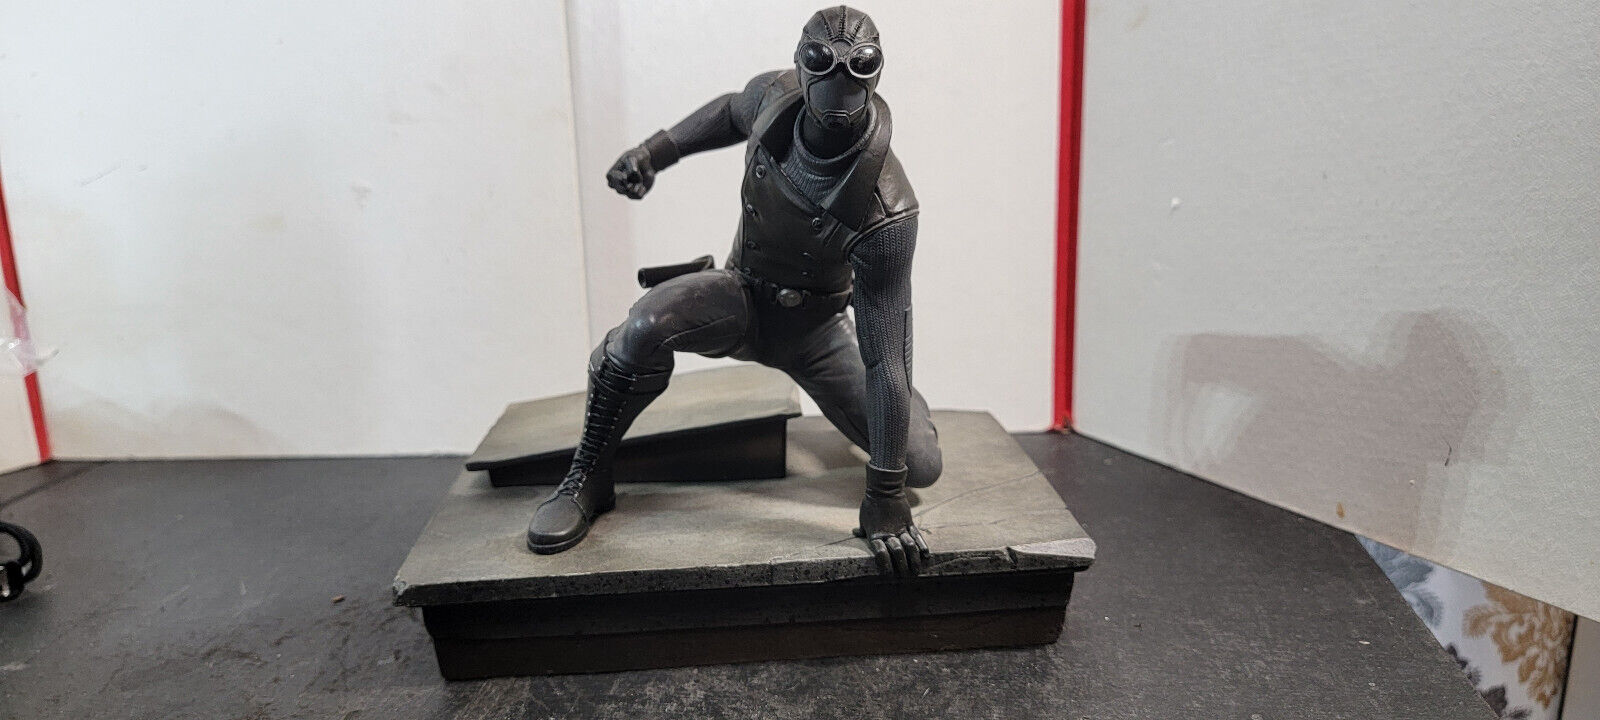 Marvel Gamerverse Gallery Spider-Man Noir PVC Diorama Statue Gamestop Exclusive